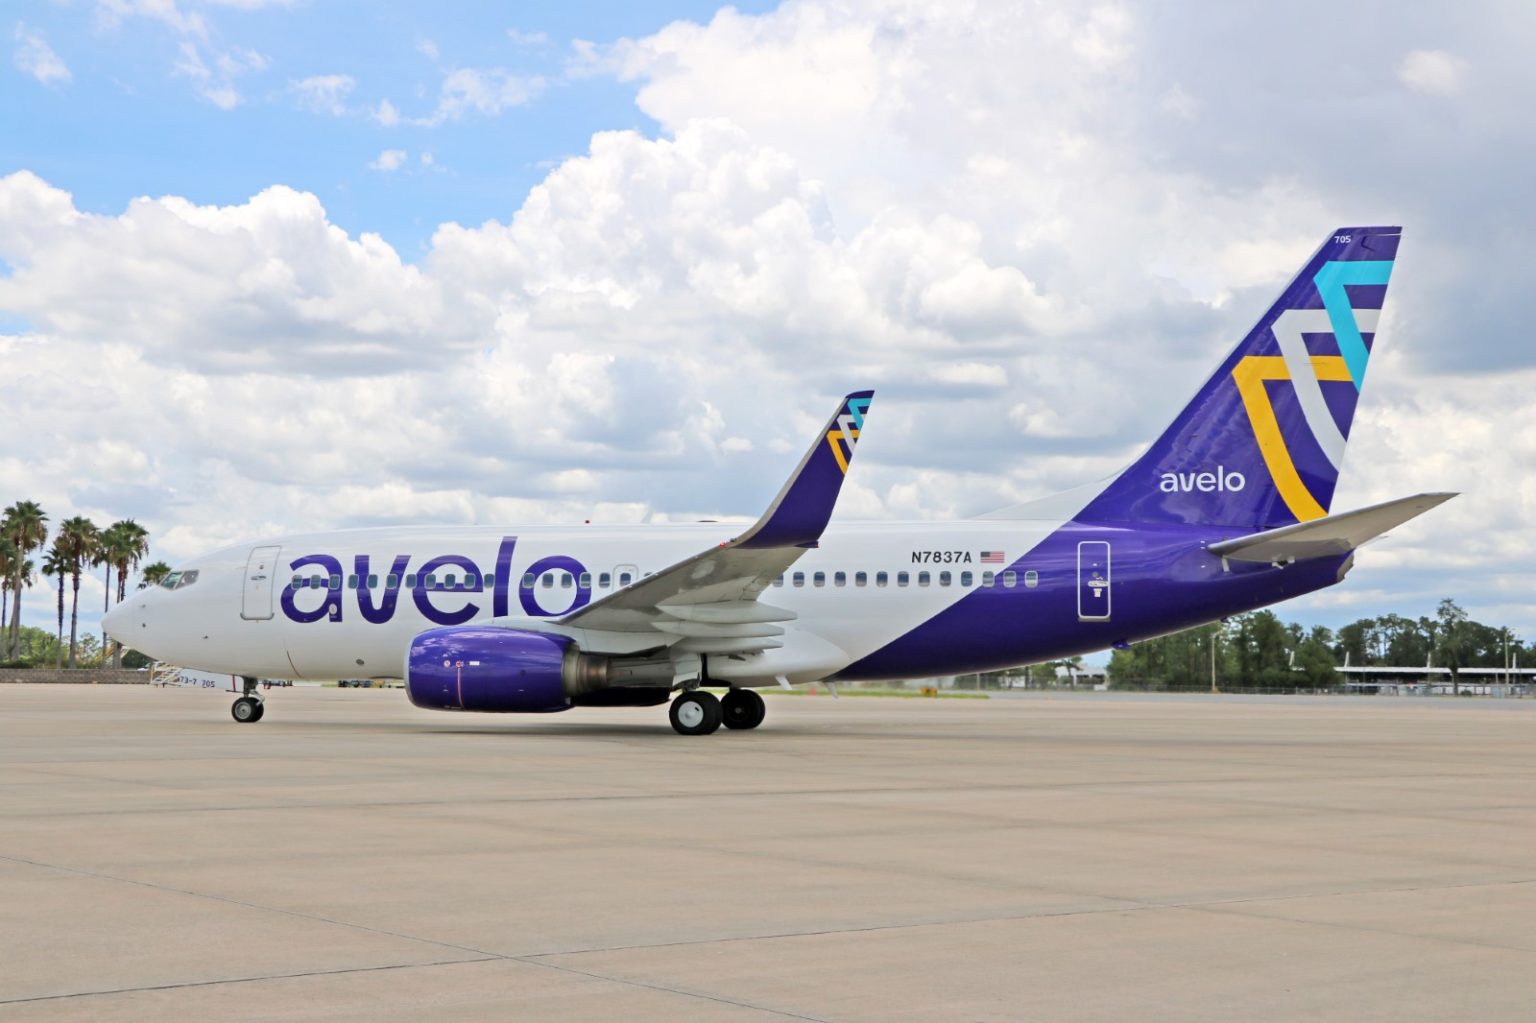 Avelo Airlines aterriza en Lexington y Kalamazoo con dos y un destino en Florida respectivamente